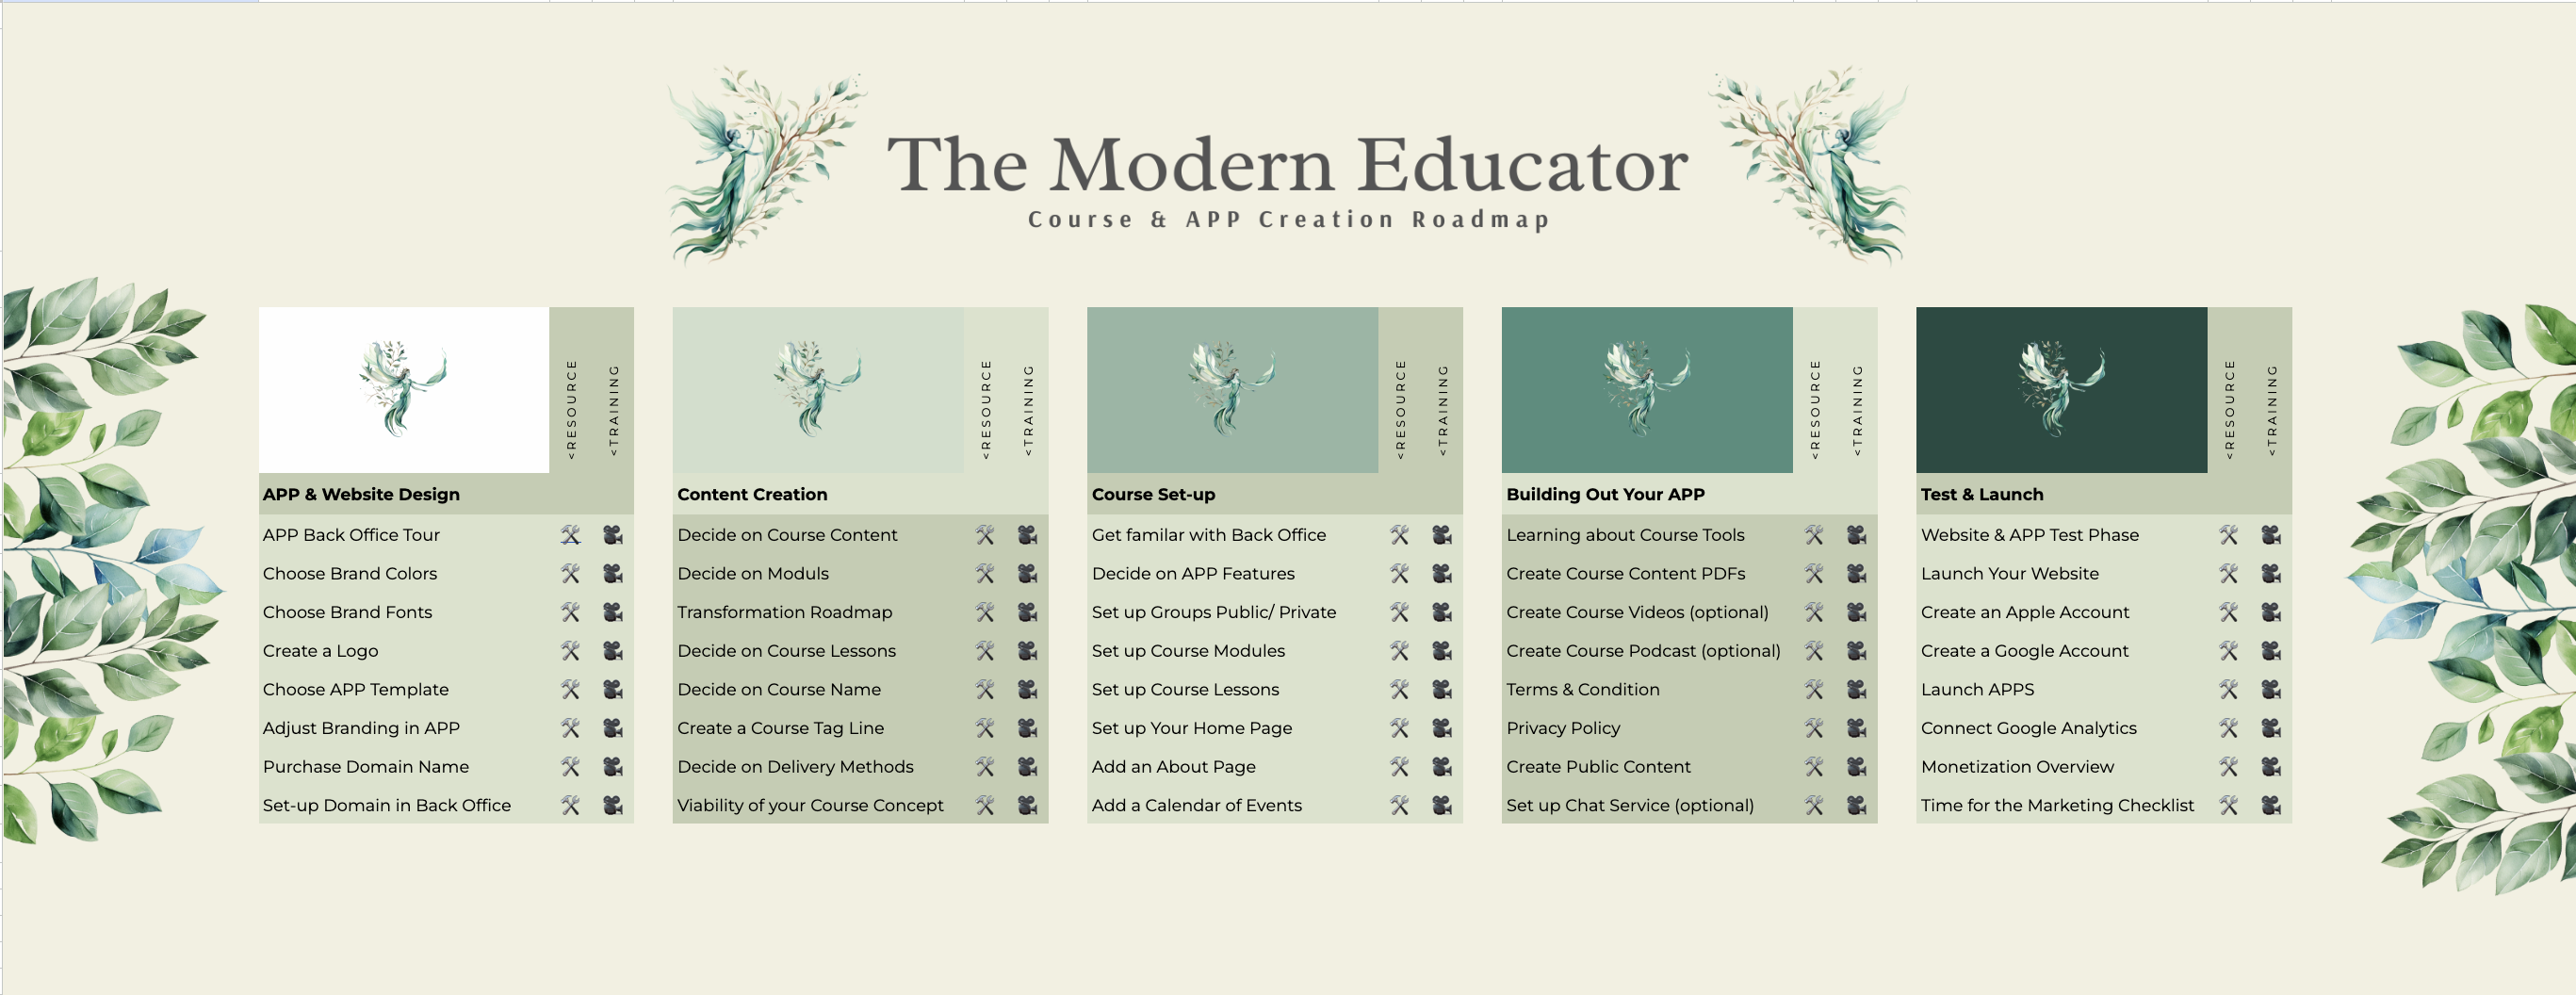 The Modern Educator Roadmap